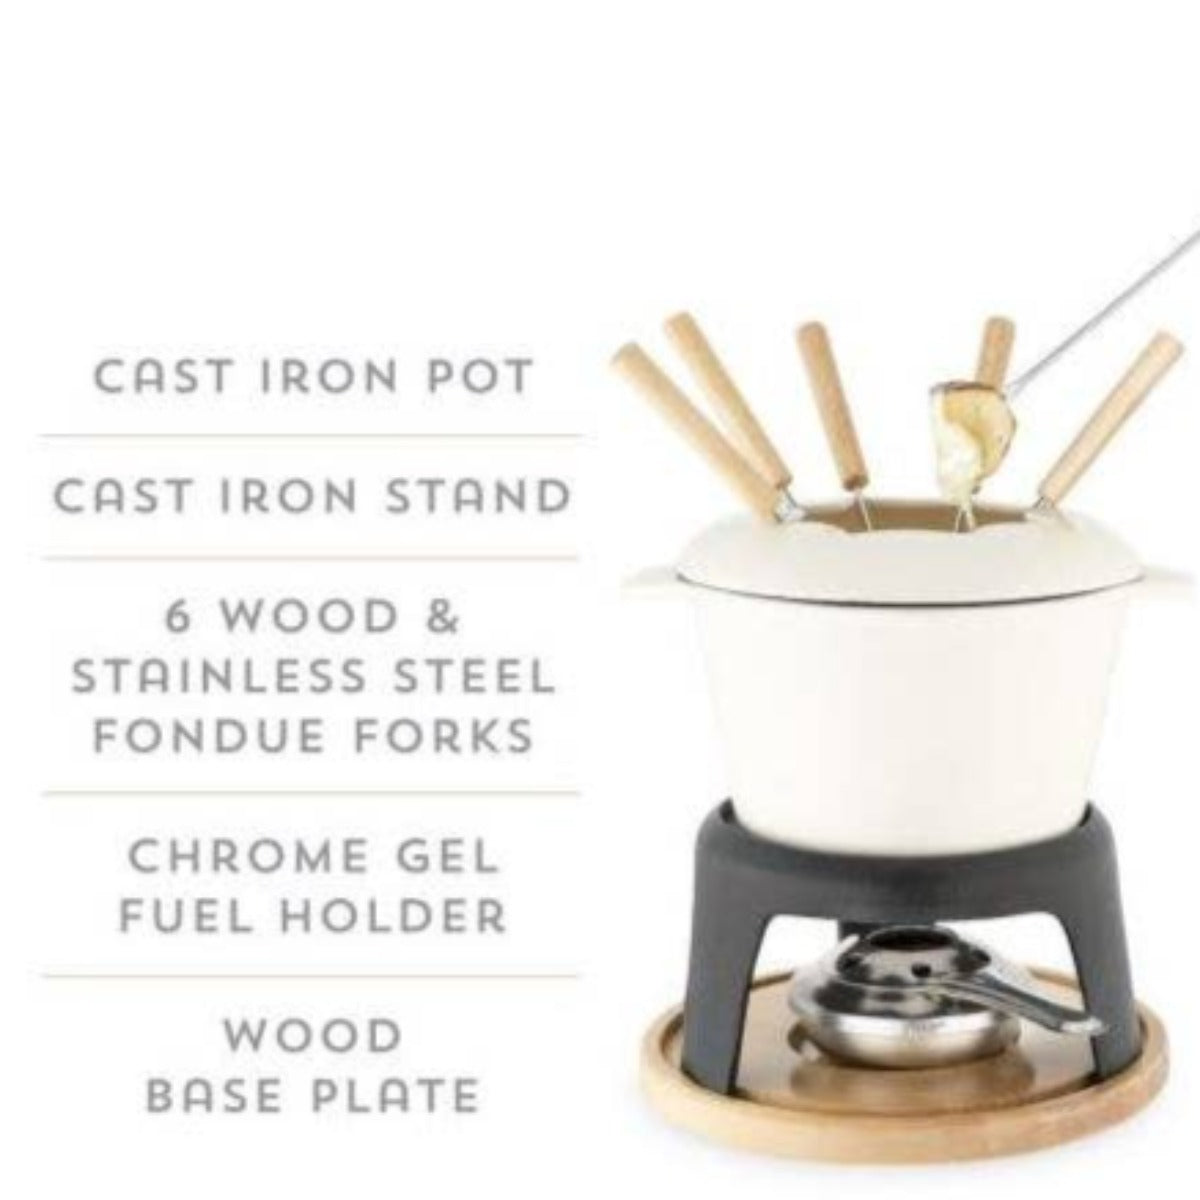 Cast Iron Fondue Set- Let's fondue together.